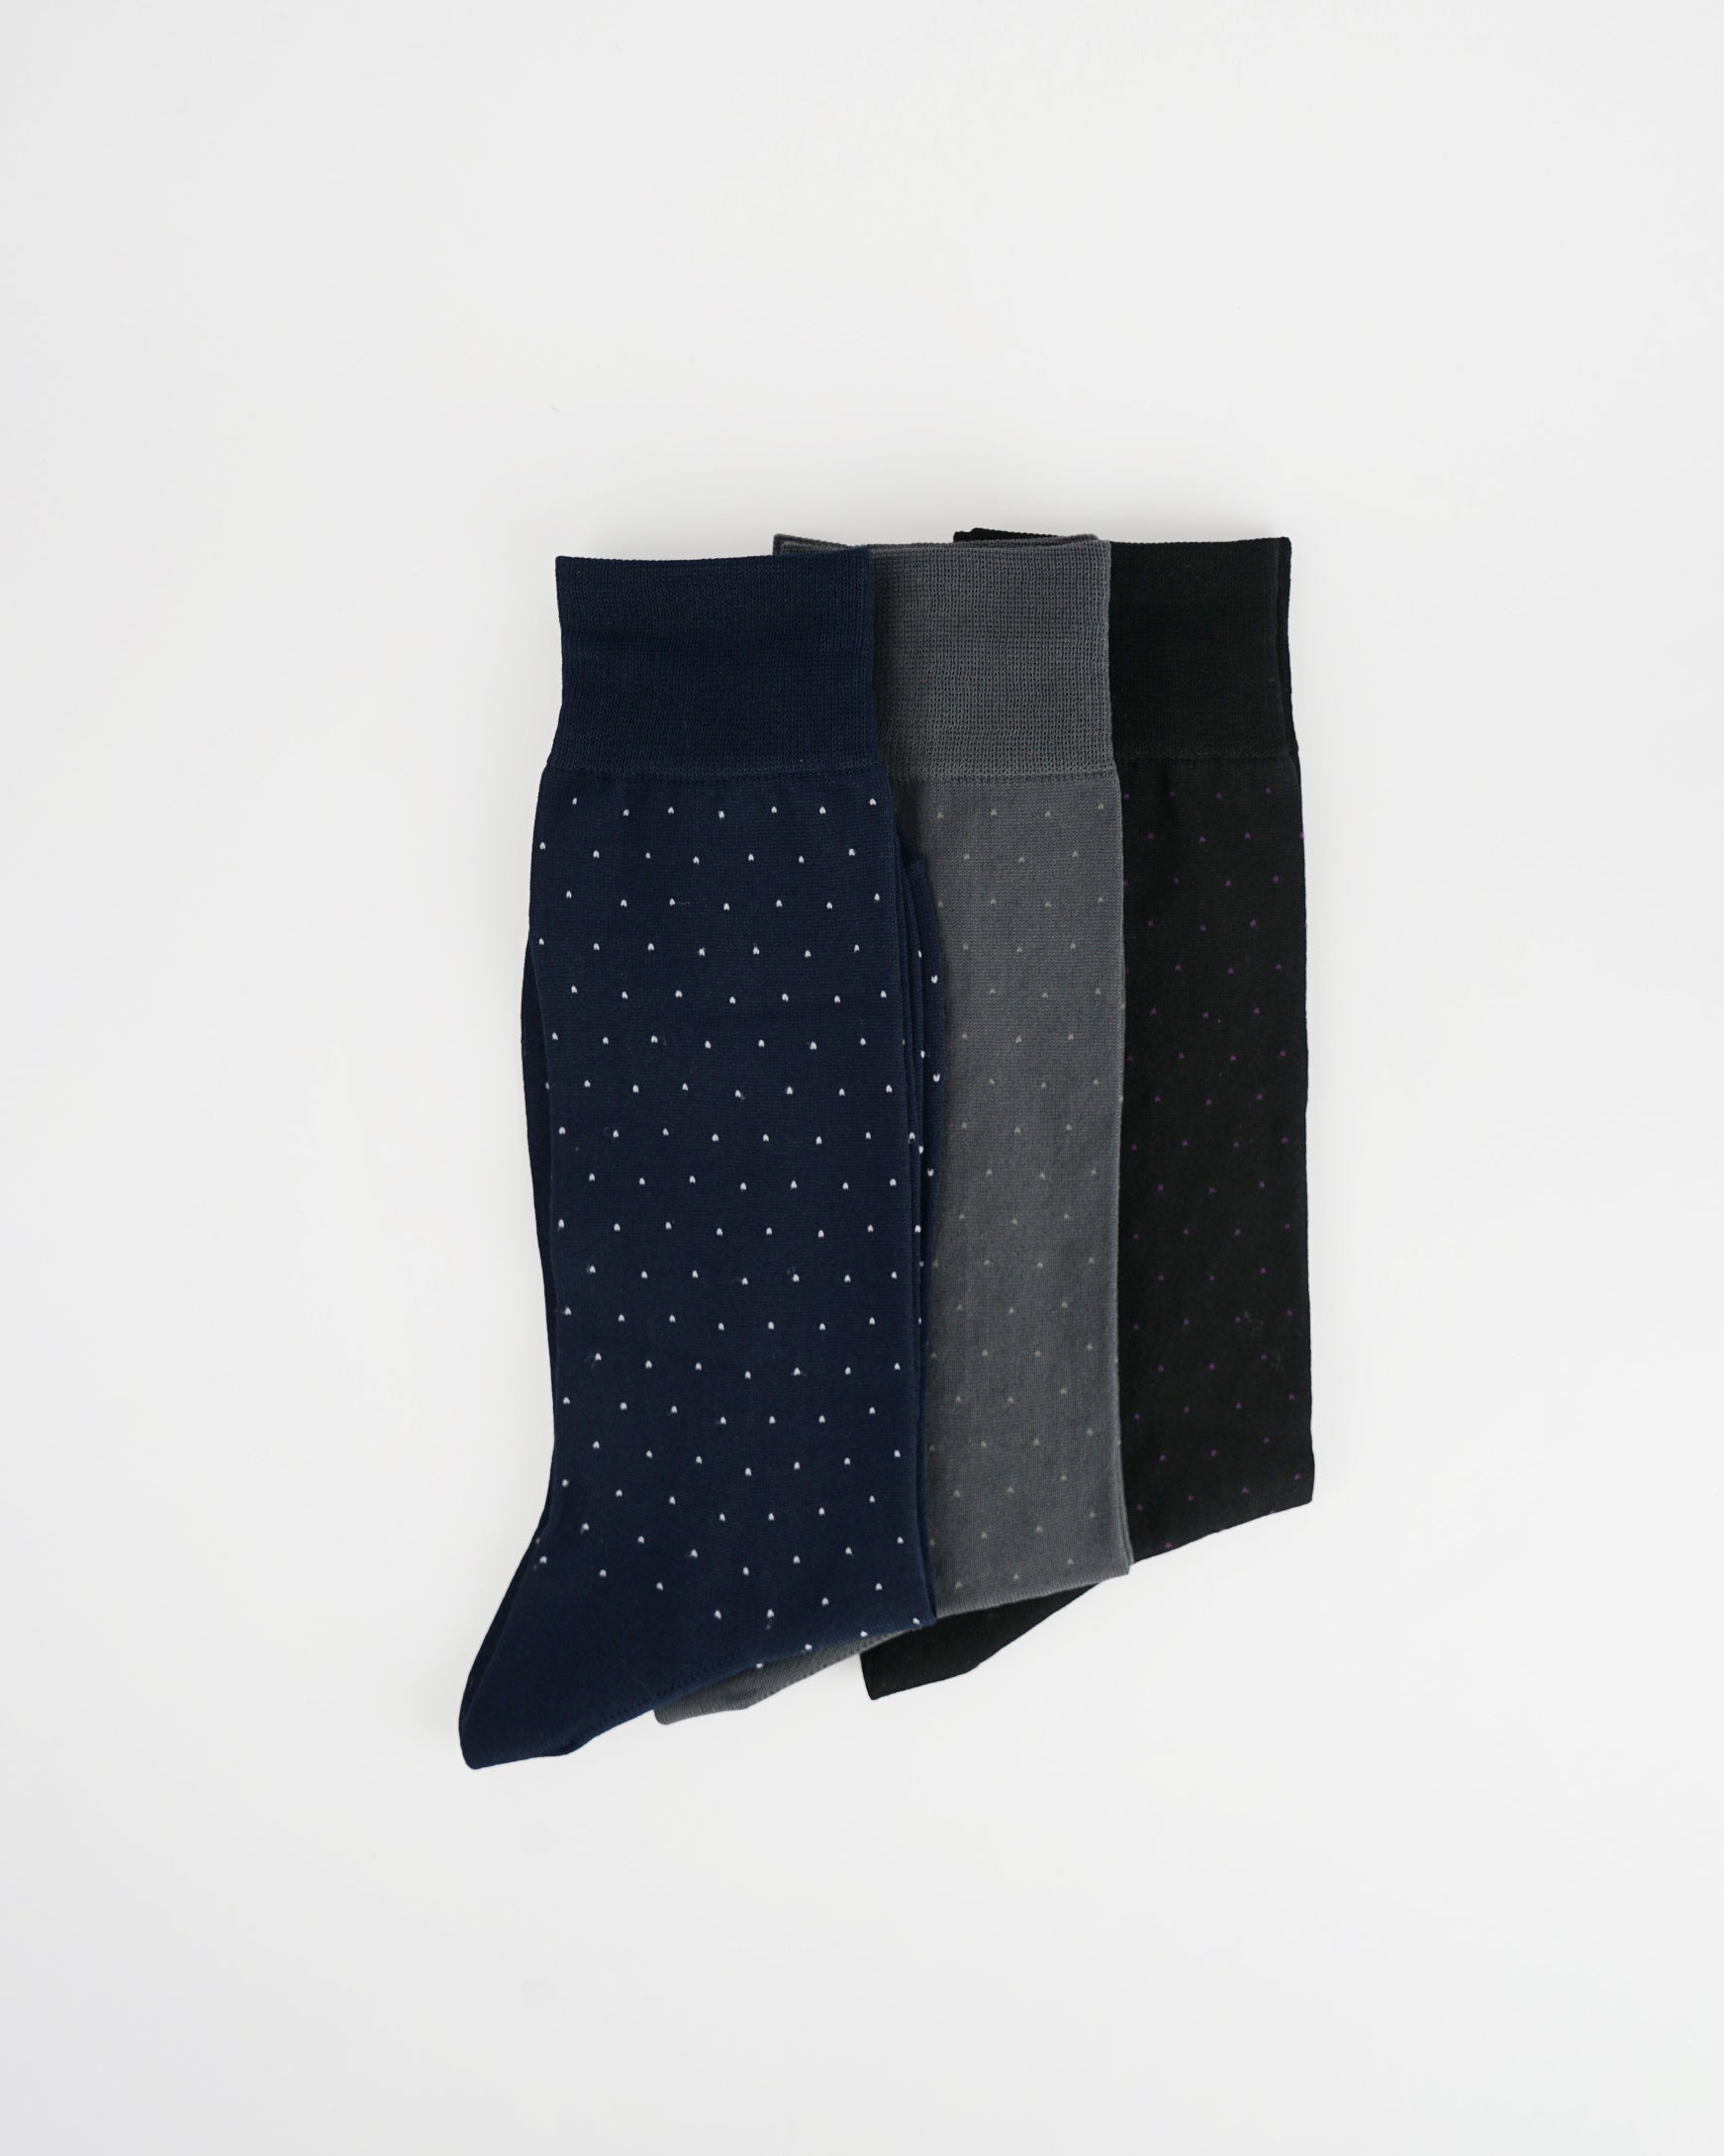 Polka Dot Dress Socks Set / Gray Black Navy